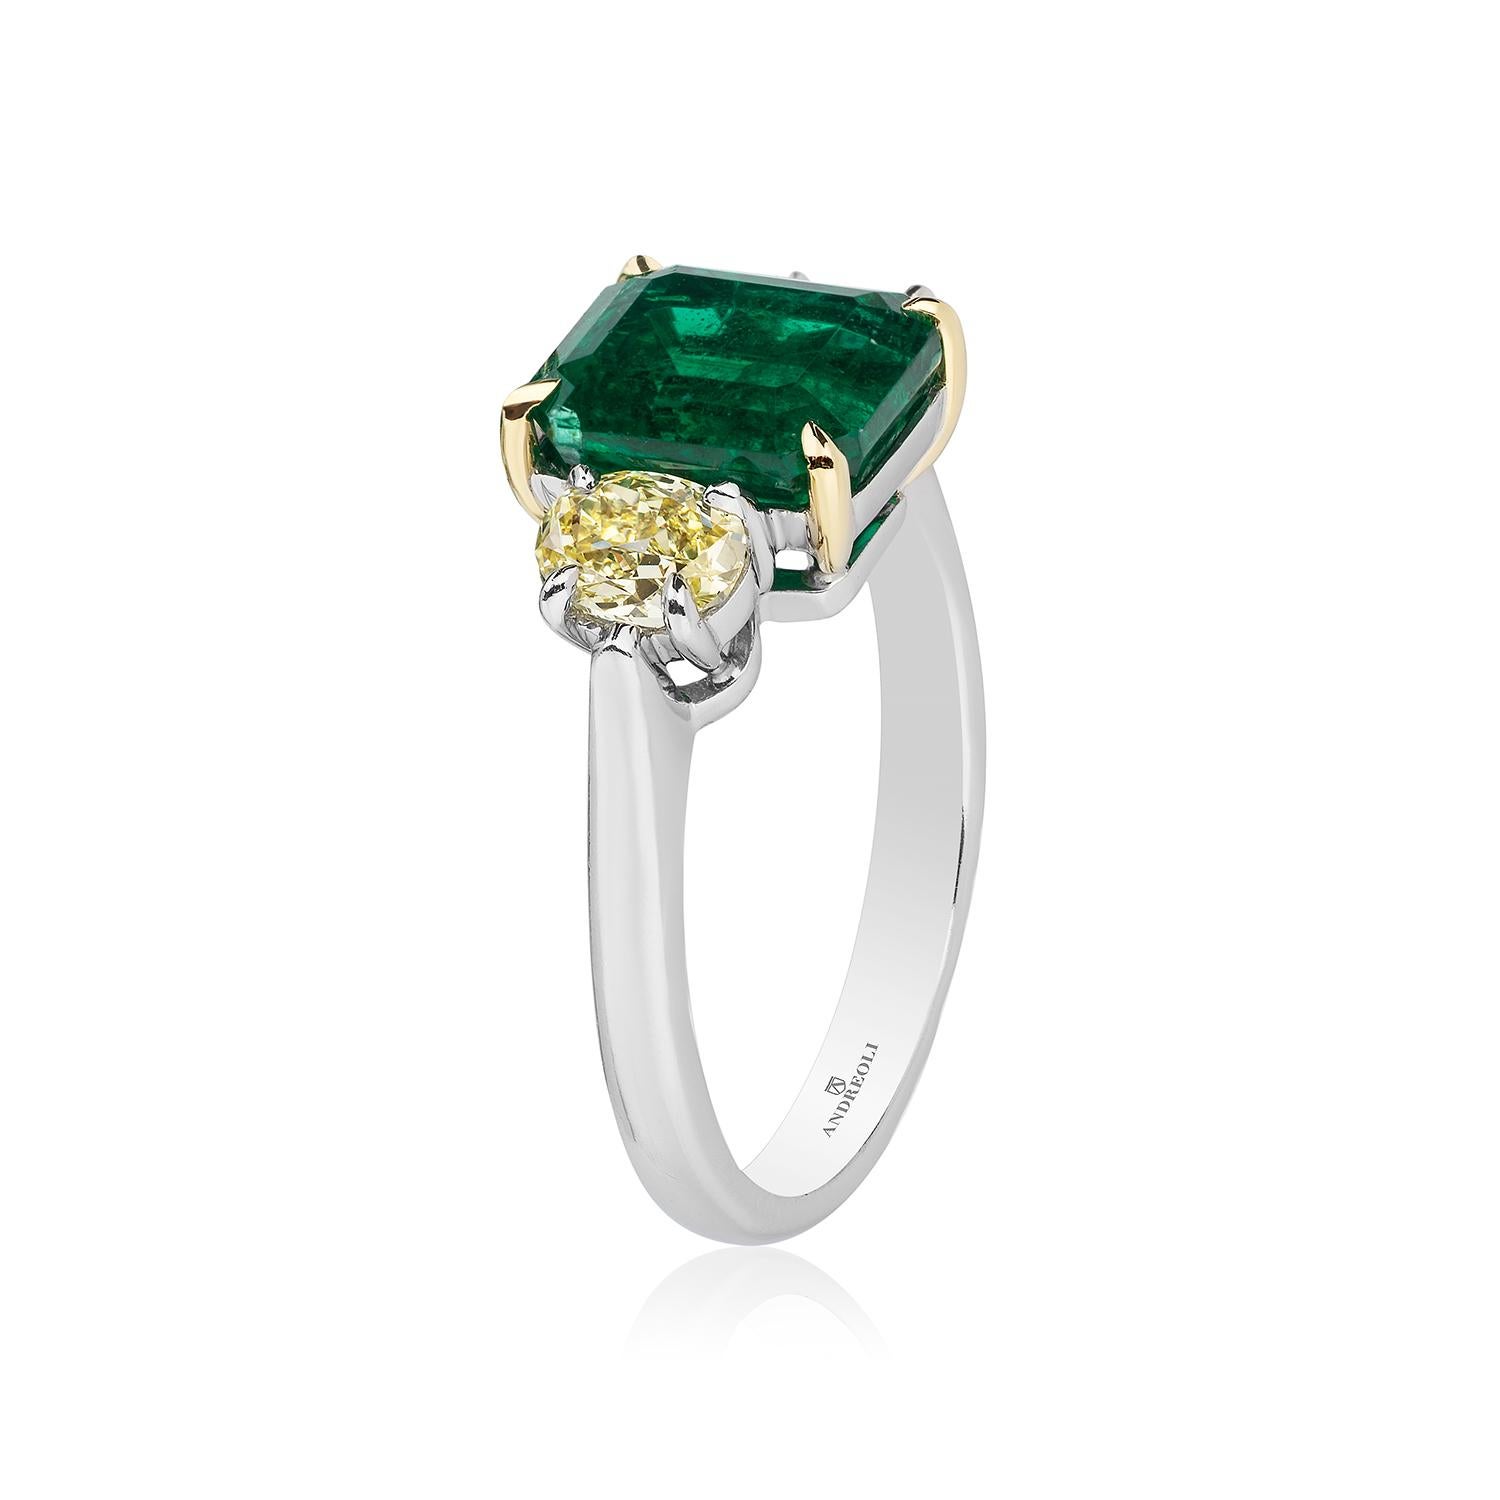 Andreoli 2.96 Carat Zambian Emerald Yellow Diamond Platinum Ring CDC ...